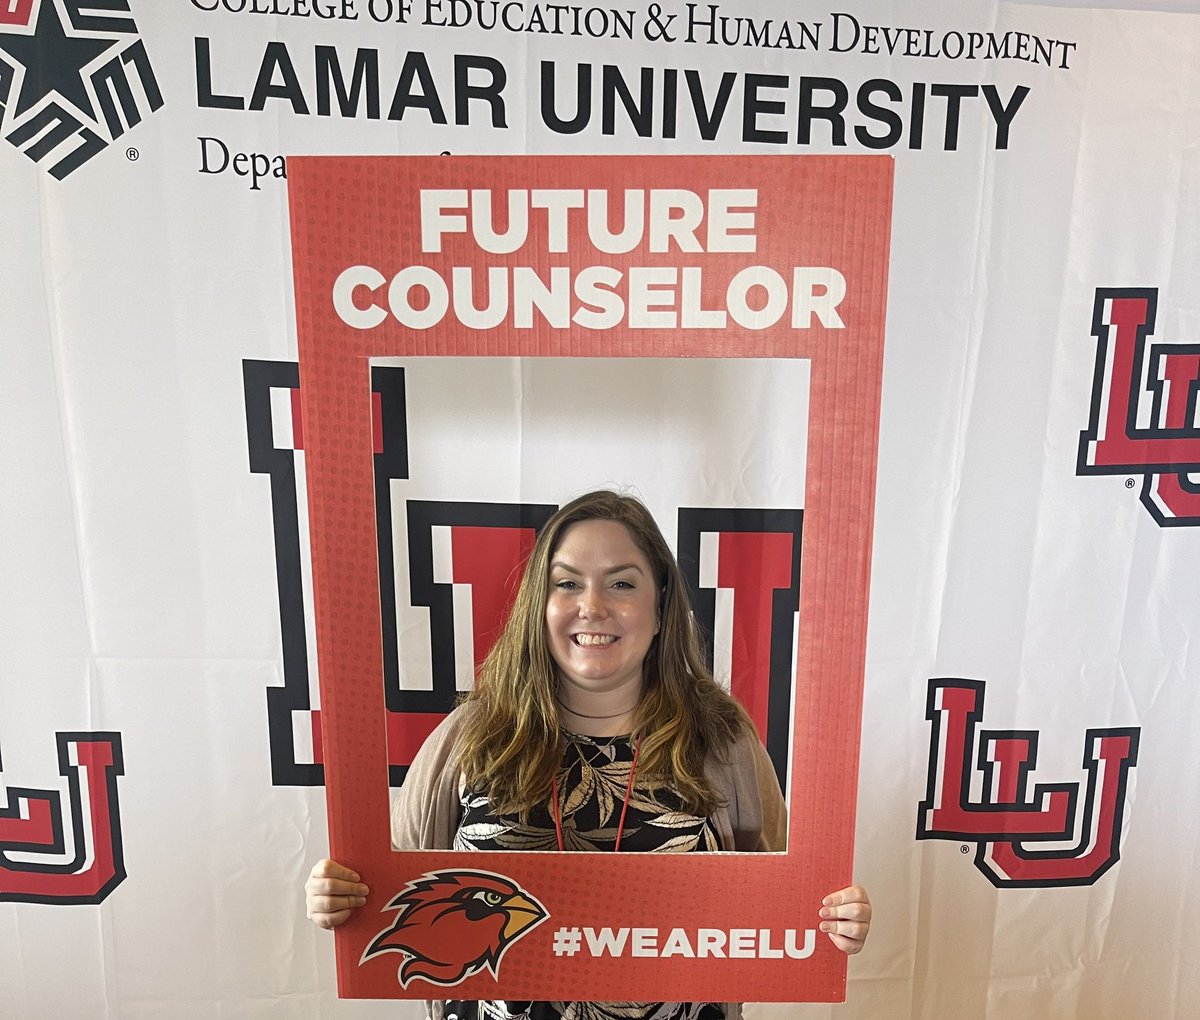 Future school counselor 🧠❤️👩‍🏫
@LamarUniversity #residency #schoolcounseling
#MEd